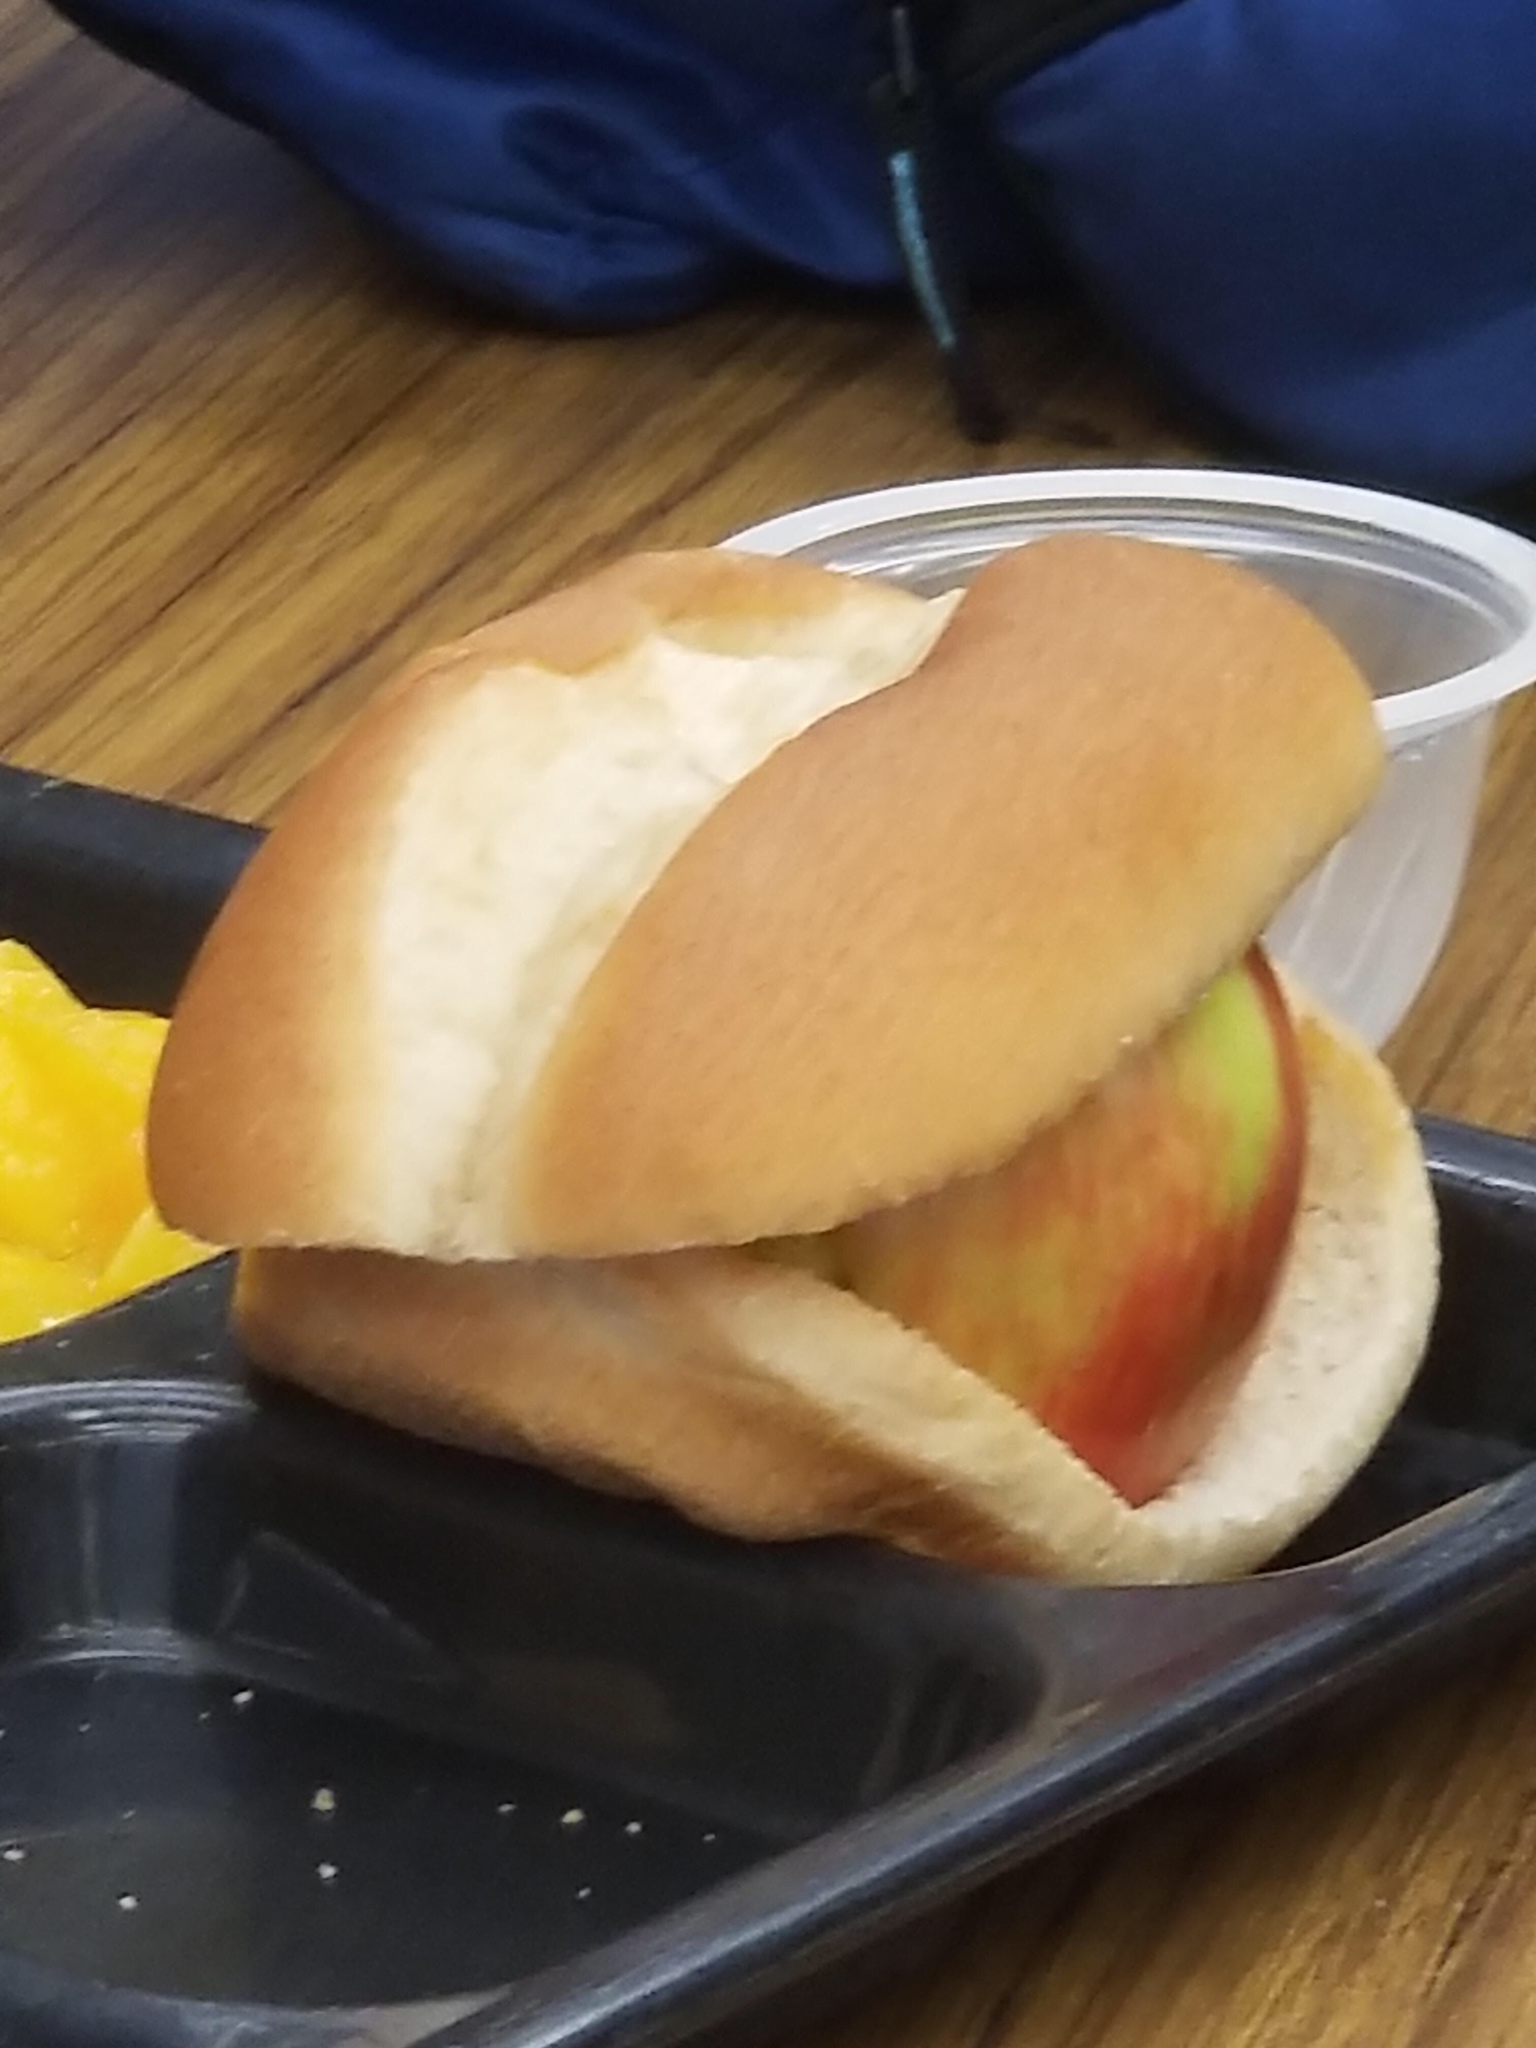 cursed image of fruit in a bun